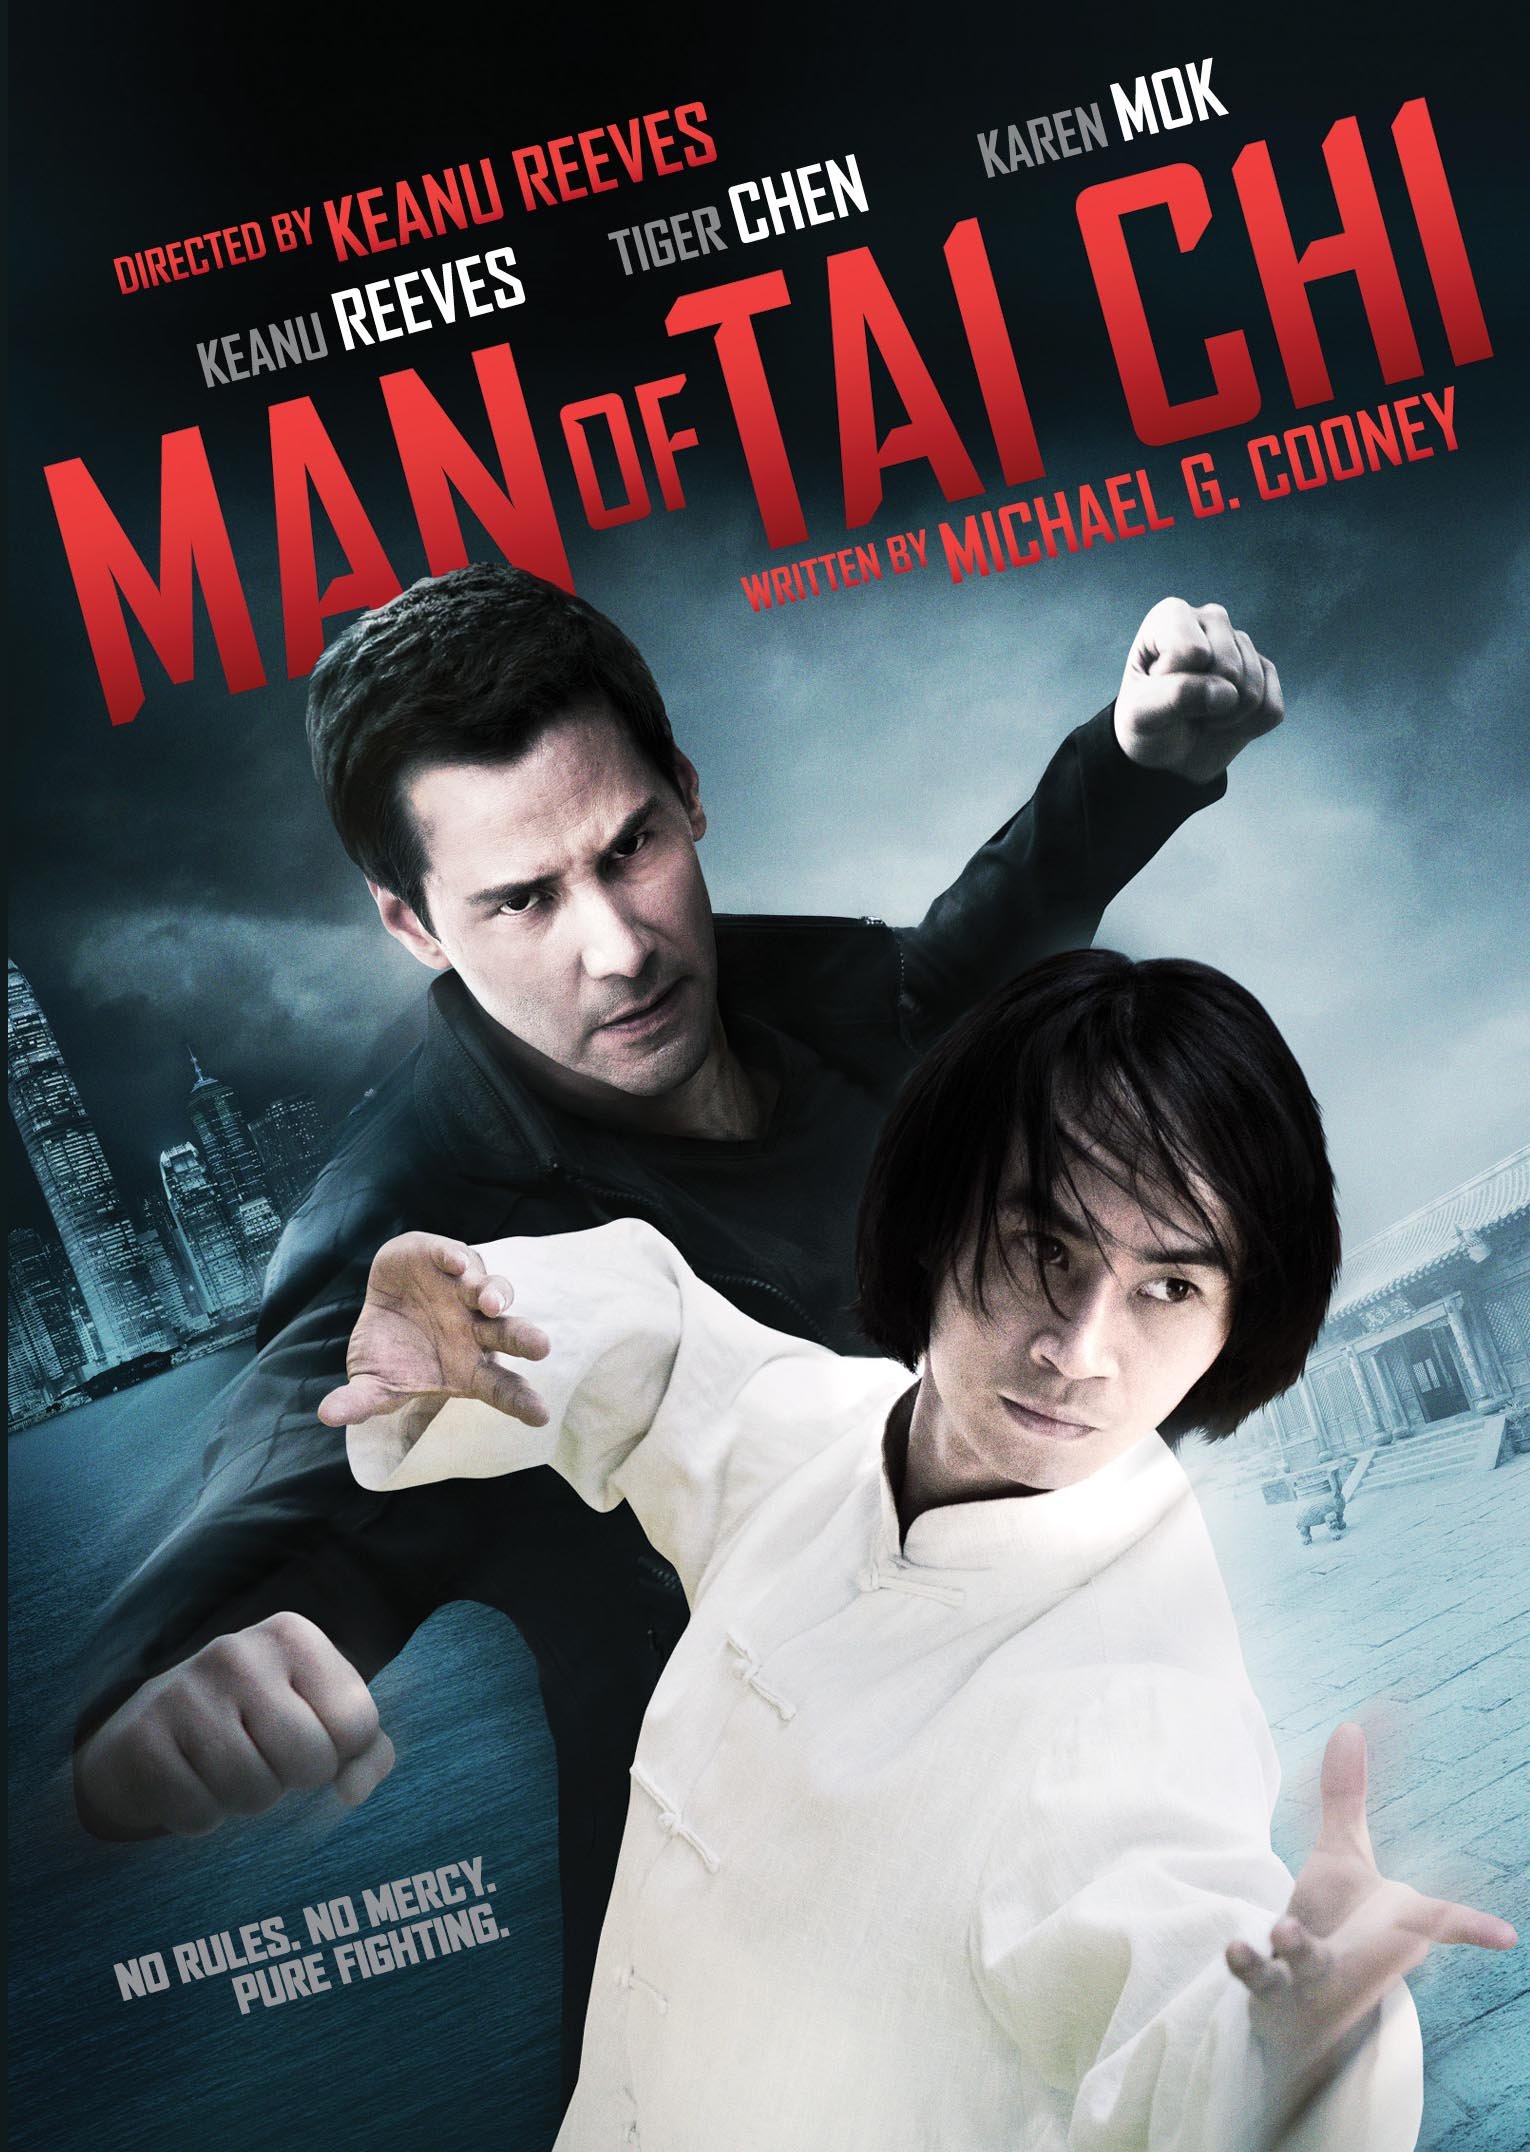 Man of Tai Chi DVD Release Date December 10, 20131530 x 2152